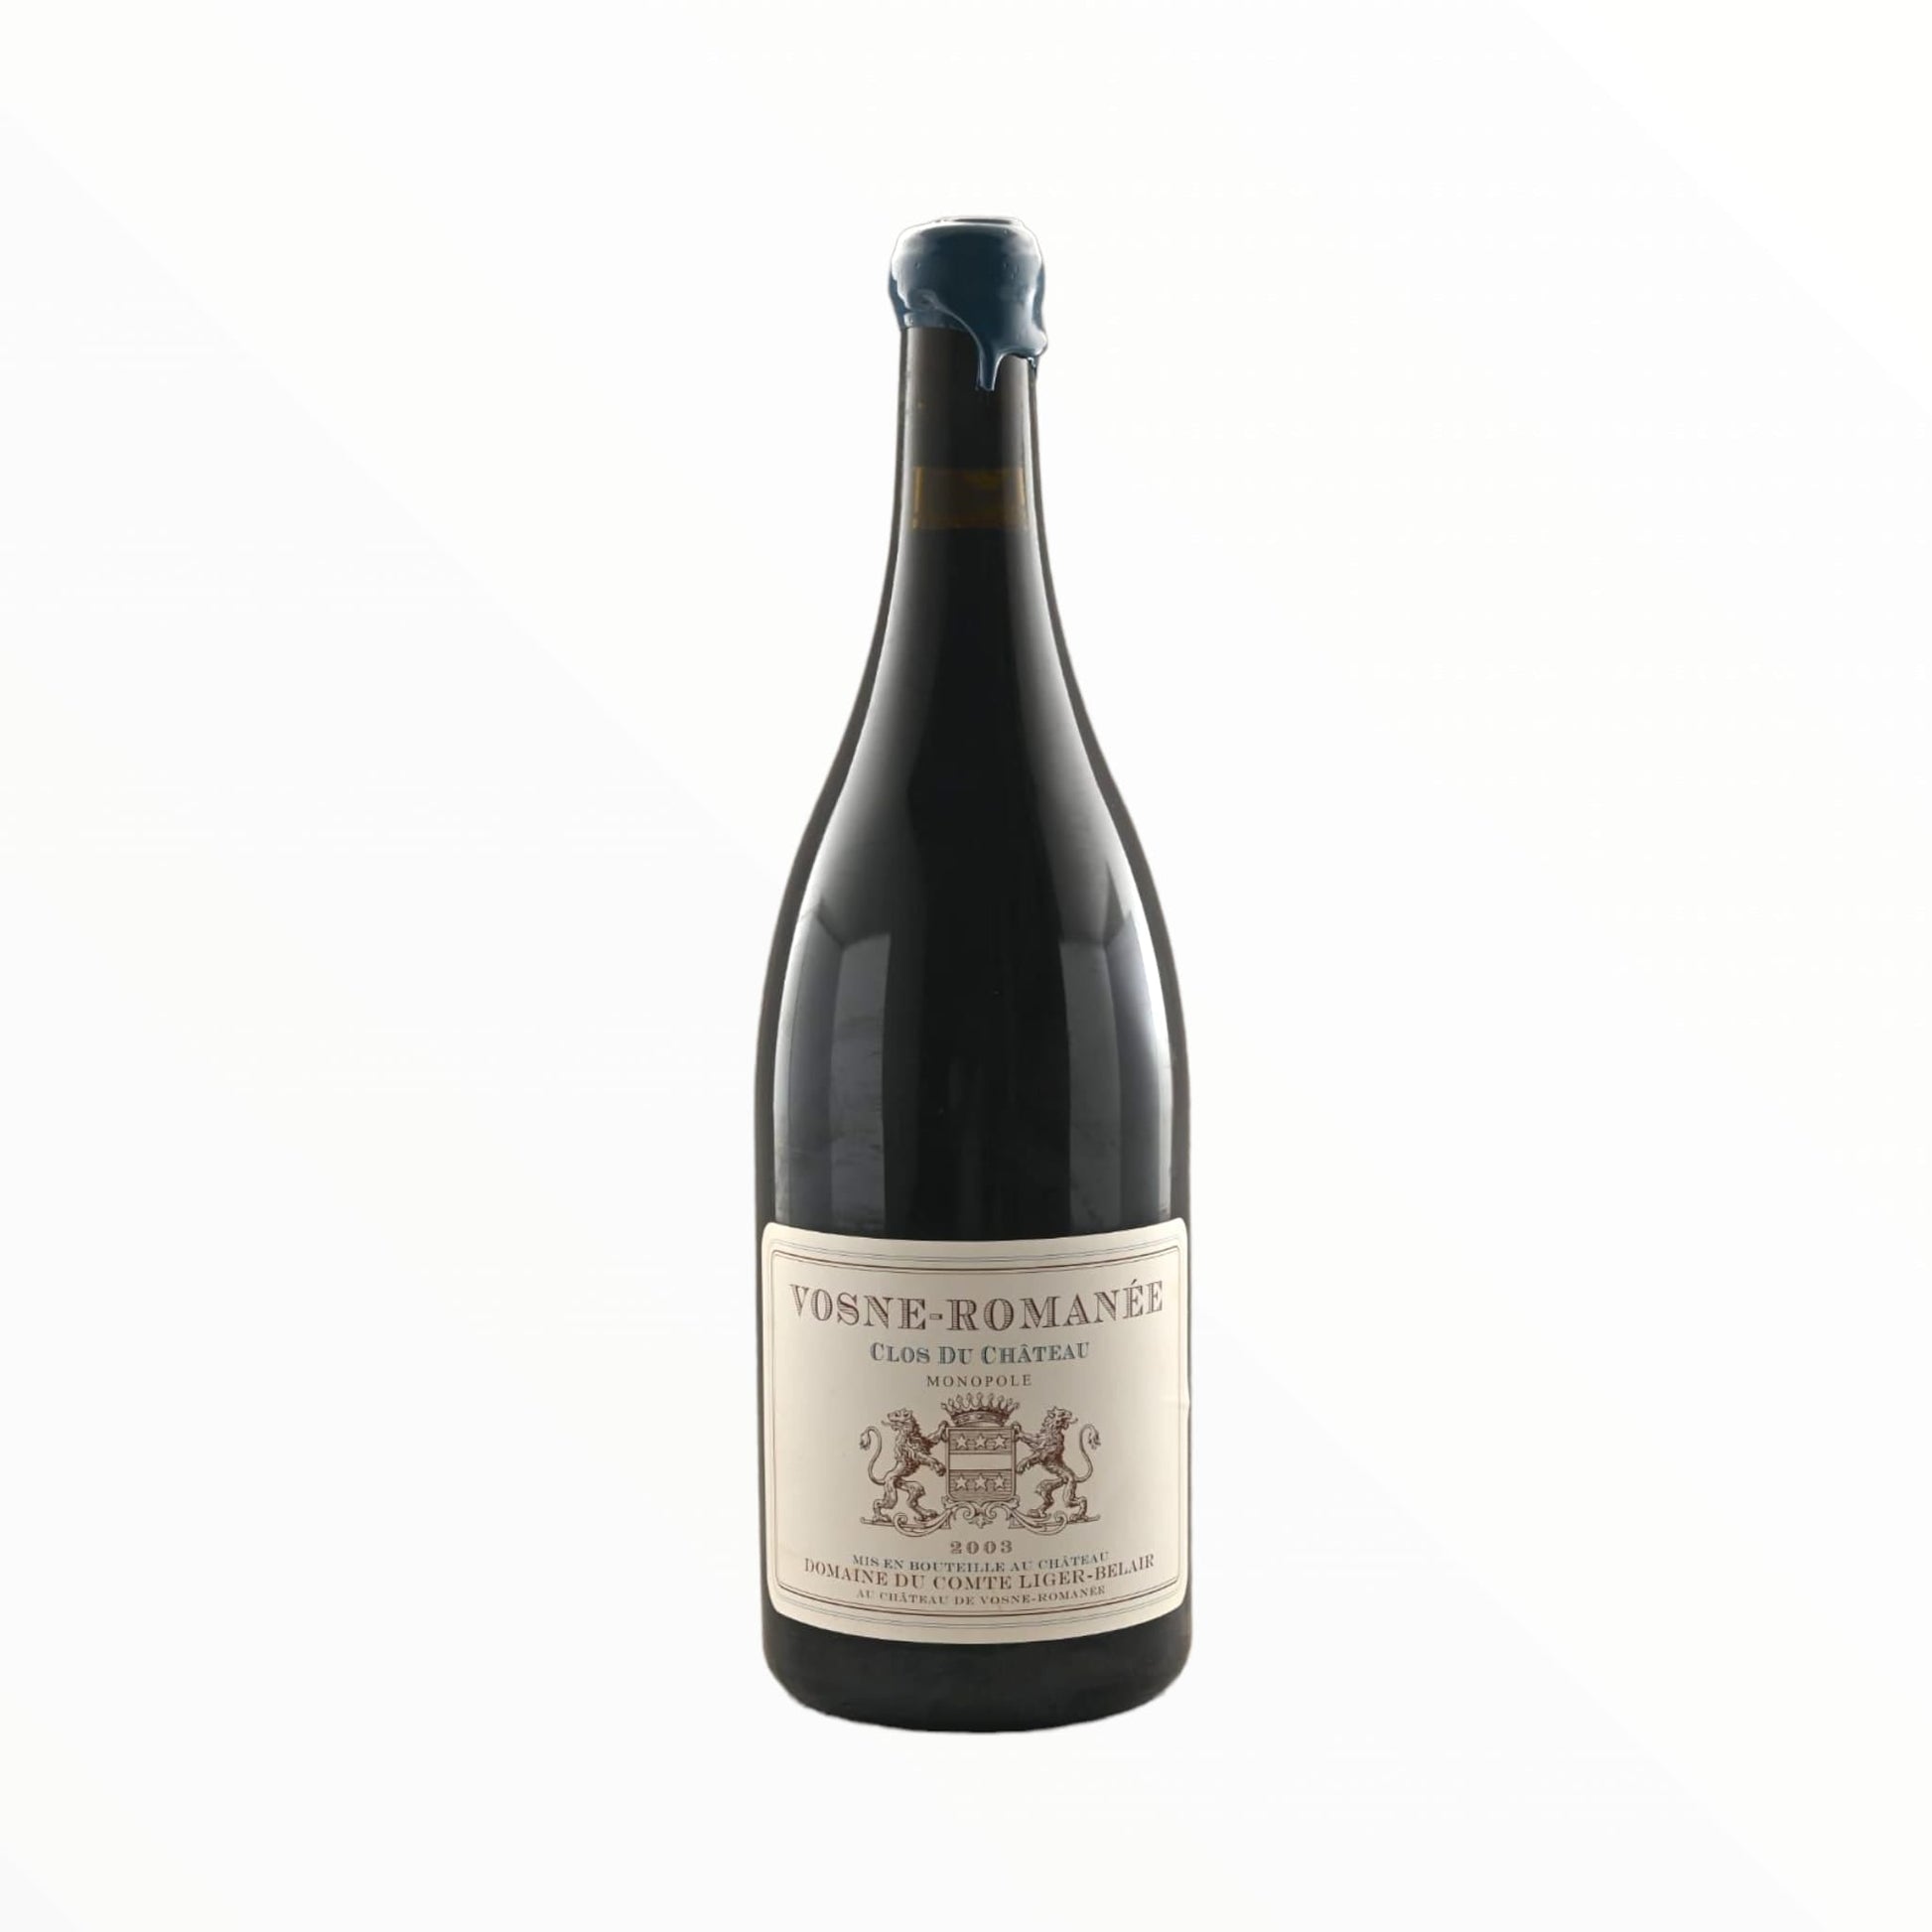 2003 Comte Liger Belair, Vosne Romanee Clos du Chateau Magnum 里贝伯爵酒庄城堡园 沃恩罗曼尼村 红葡萄酒